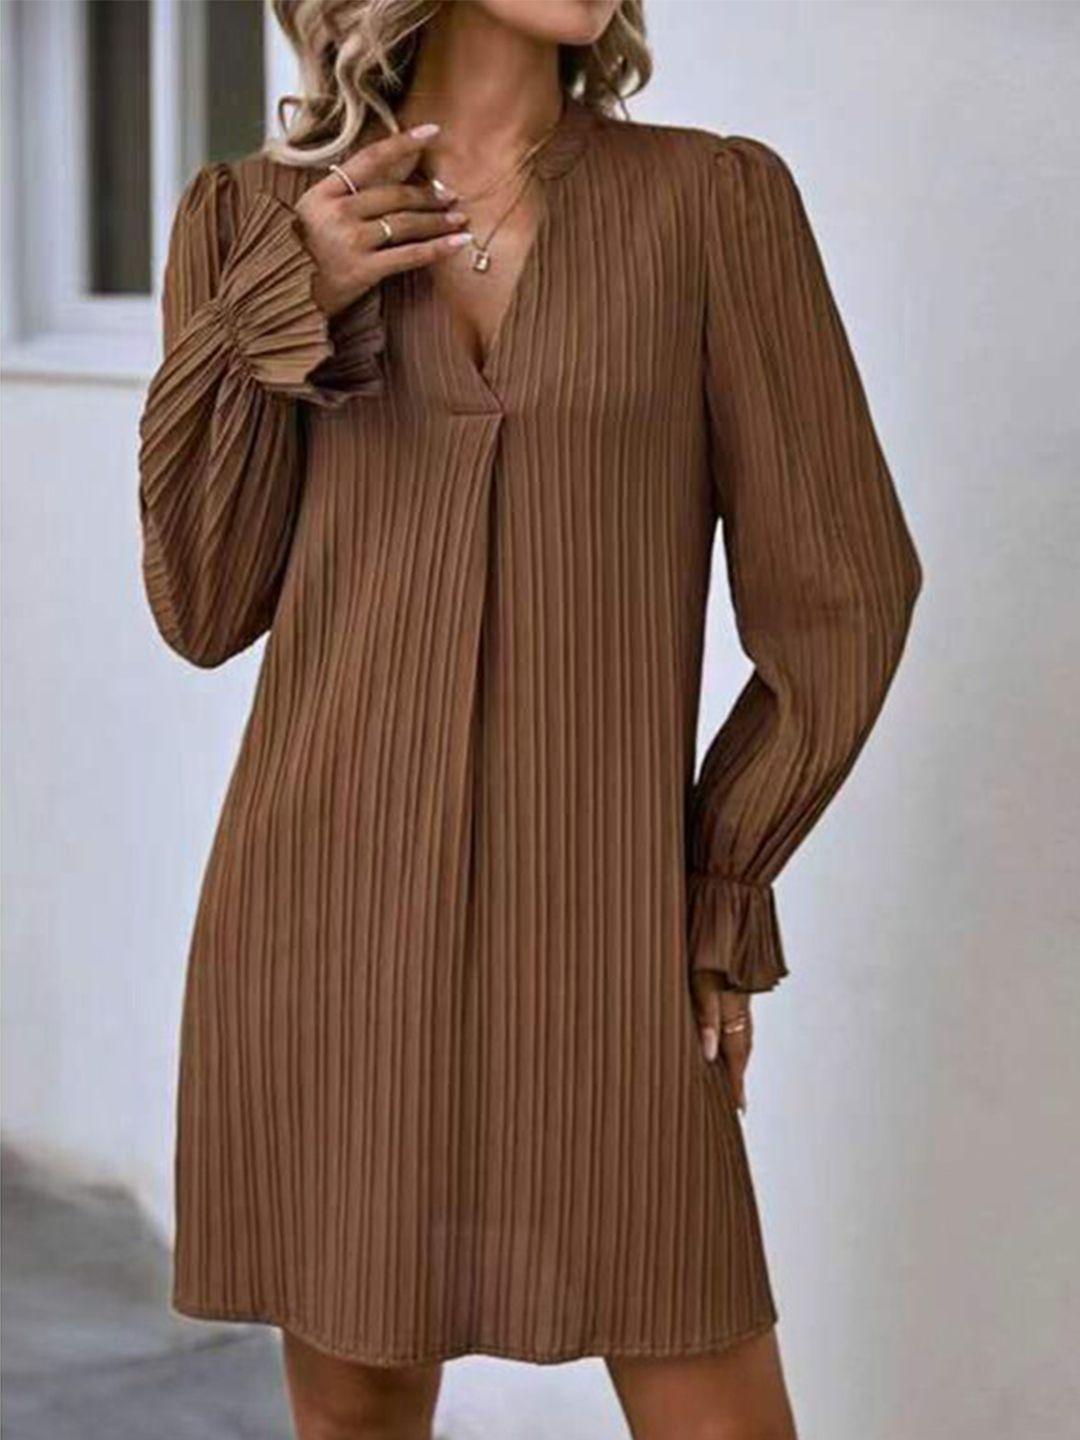 stylecast brown striped v-neck bell sleeve a-line dress